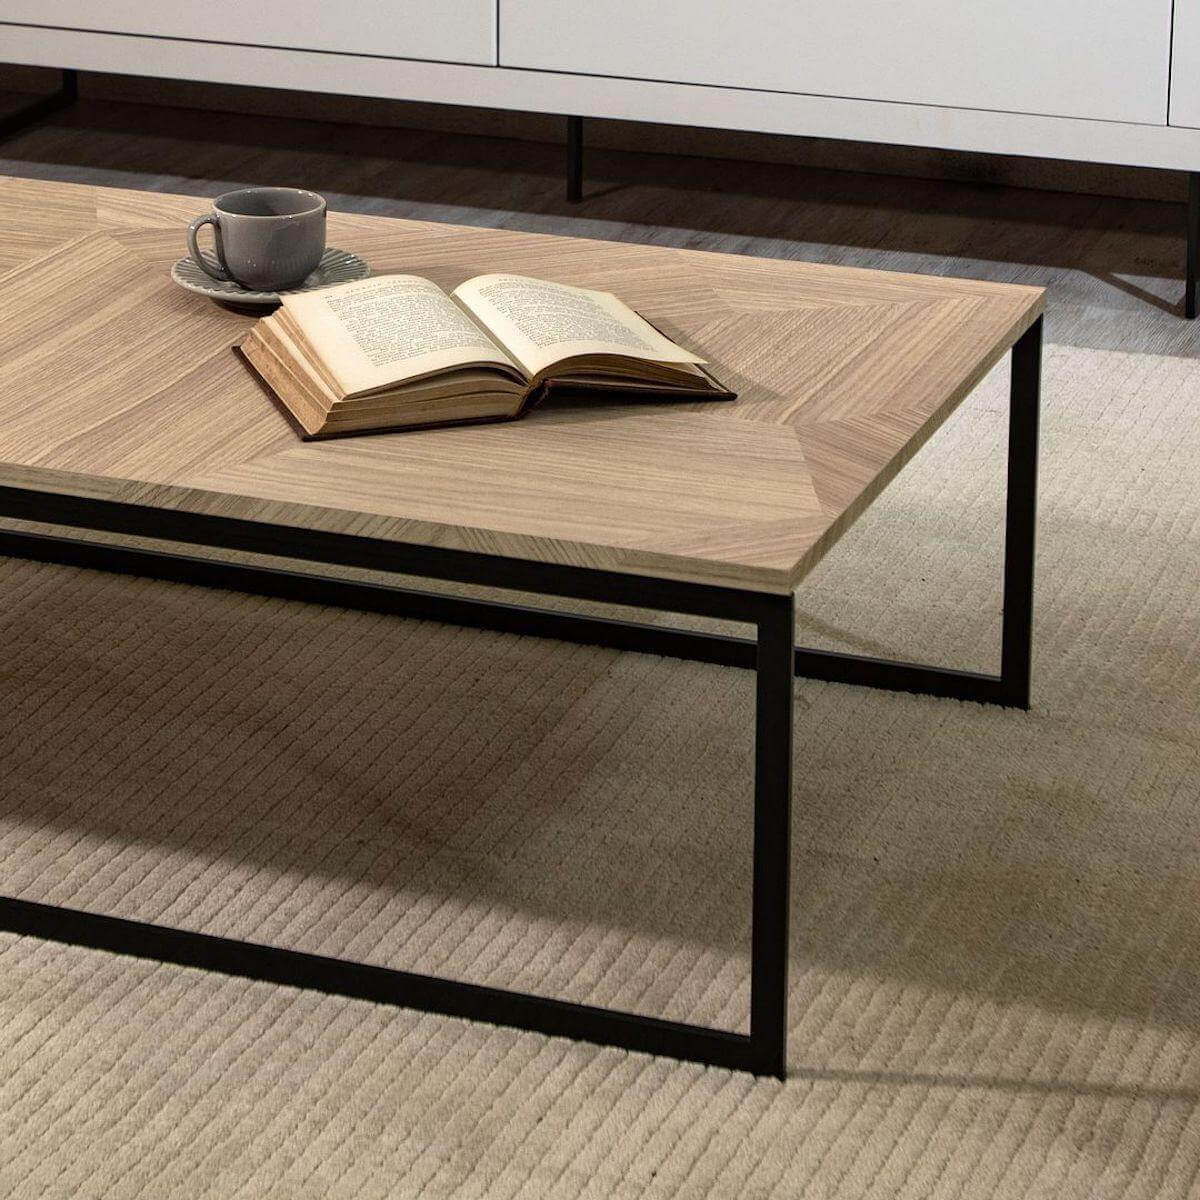 Manhattan Comfort Celine 53.14 Inch Coffee Table with Steel Legs in Mosaic Wood 255351 Corner #color_mosaic wood